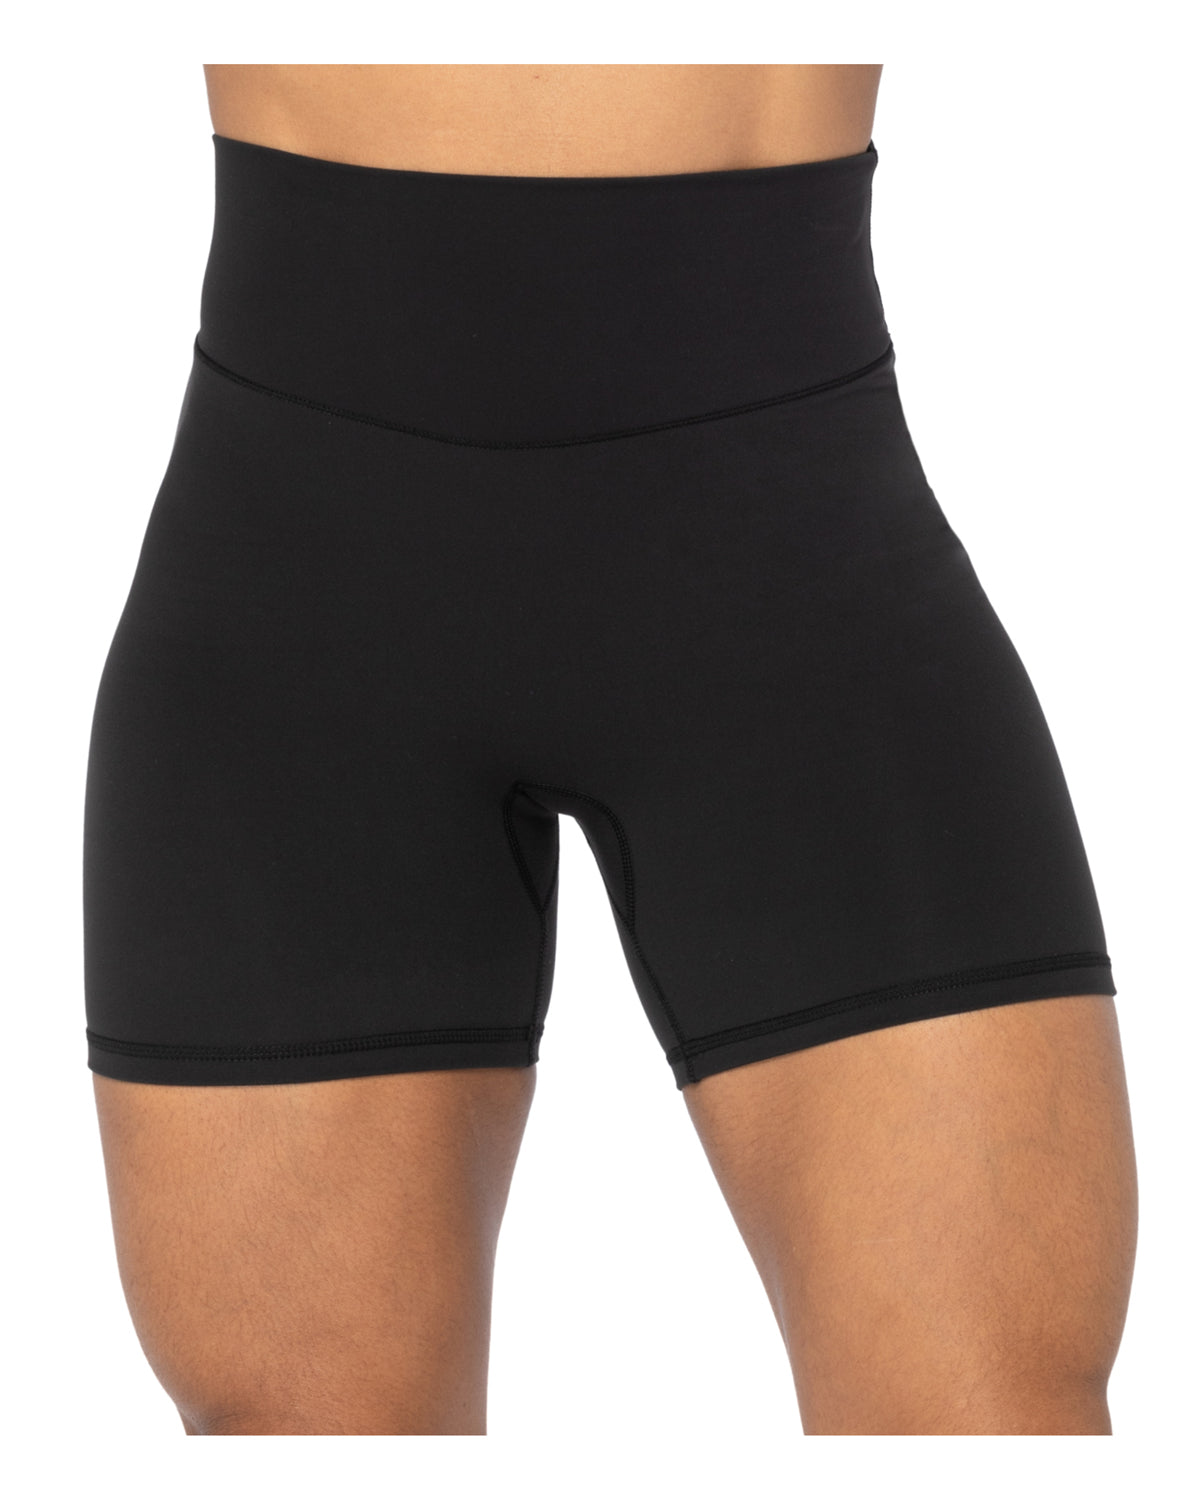 Women'S Shorts Women Basic Slip Bike Shorts Compression Workout Leggings  Yoga Shorts Capris Swim Shorts Sunzel Biker Shorts,Wine,M